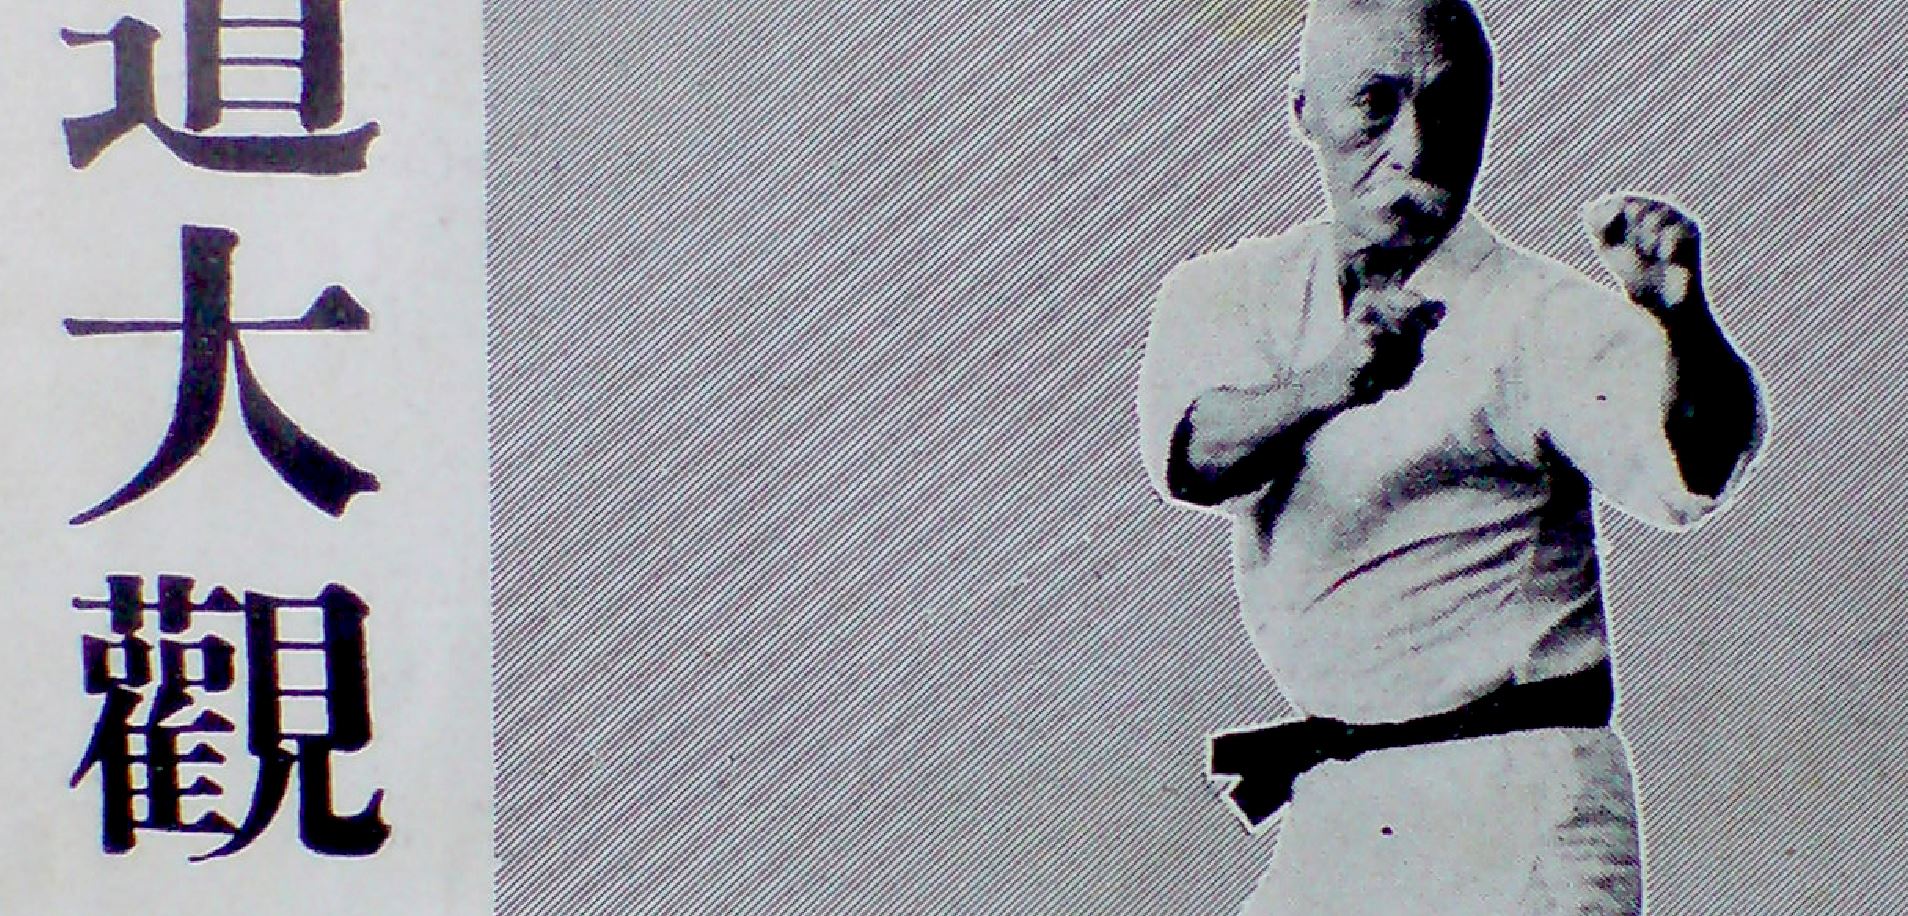 Hanashiro Chōmo, from original 1938 edition of "Karatedo Taikan" of Nagamine Shoshin sensei. Photo by this author.